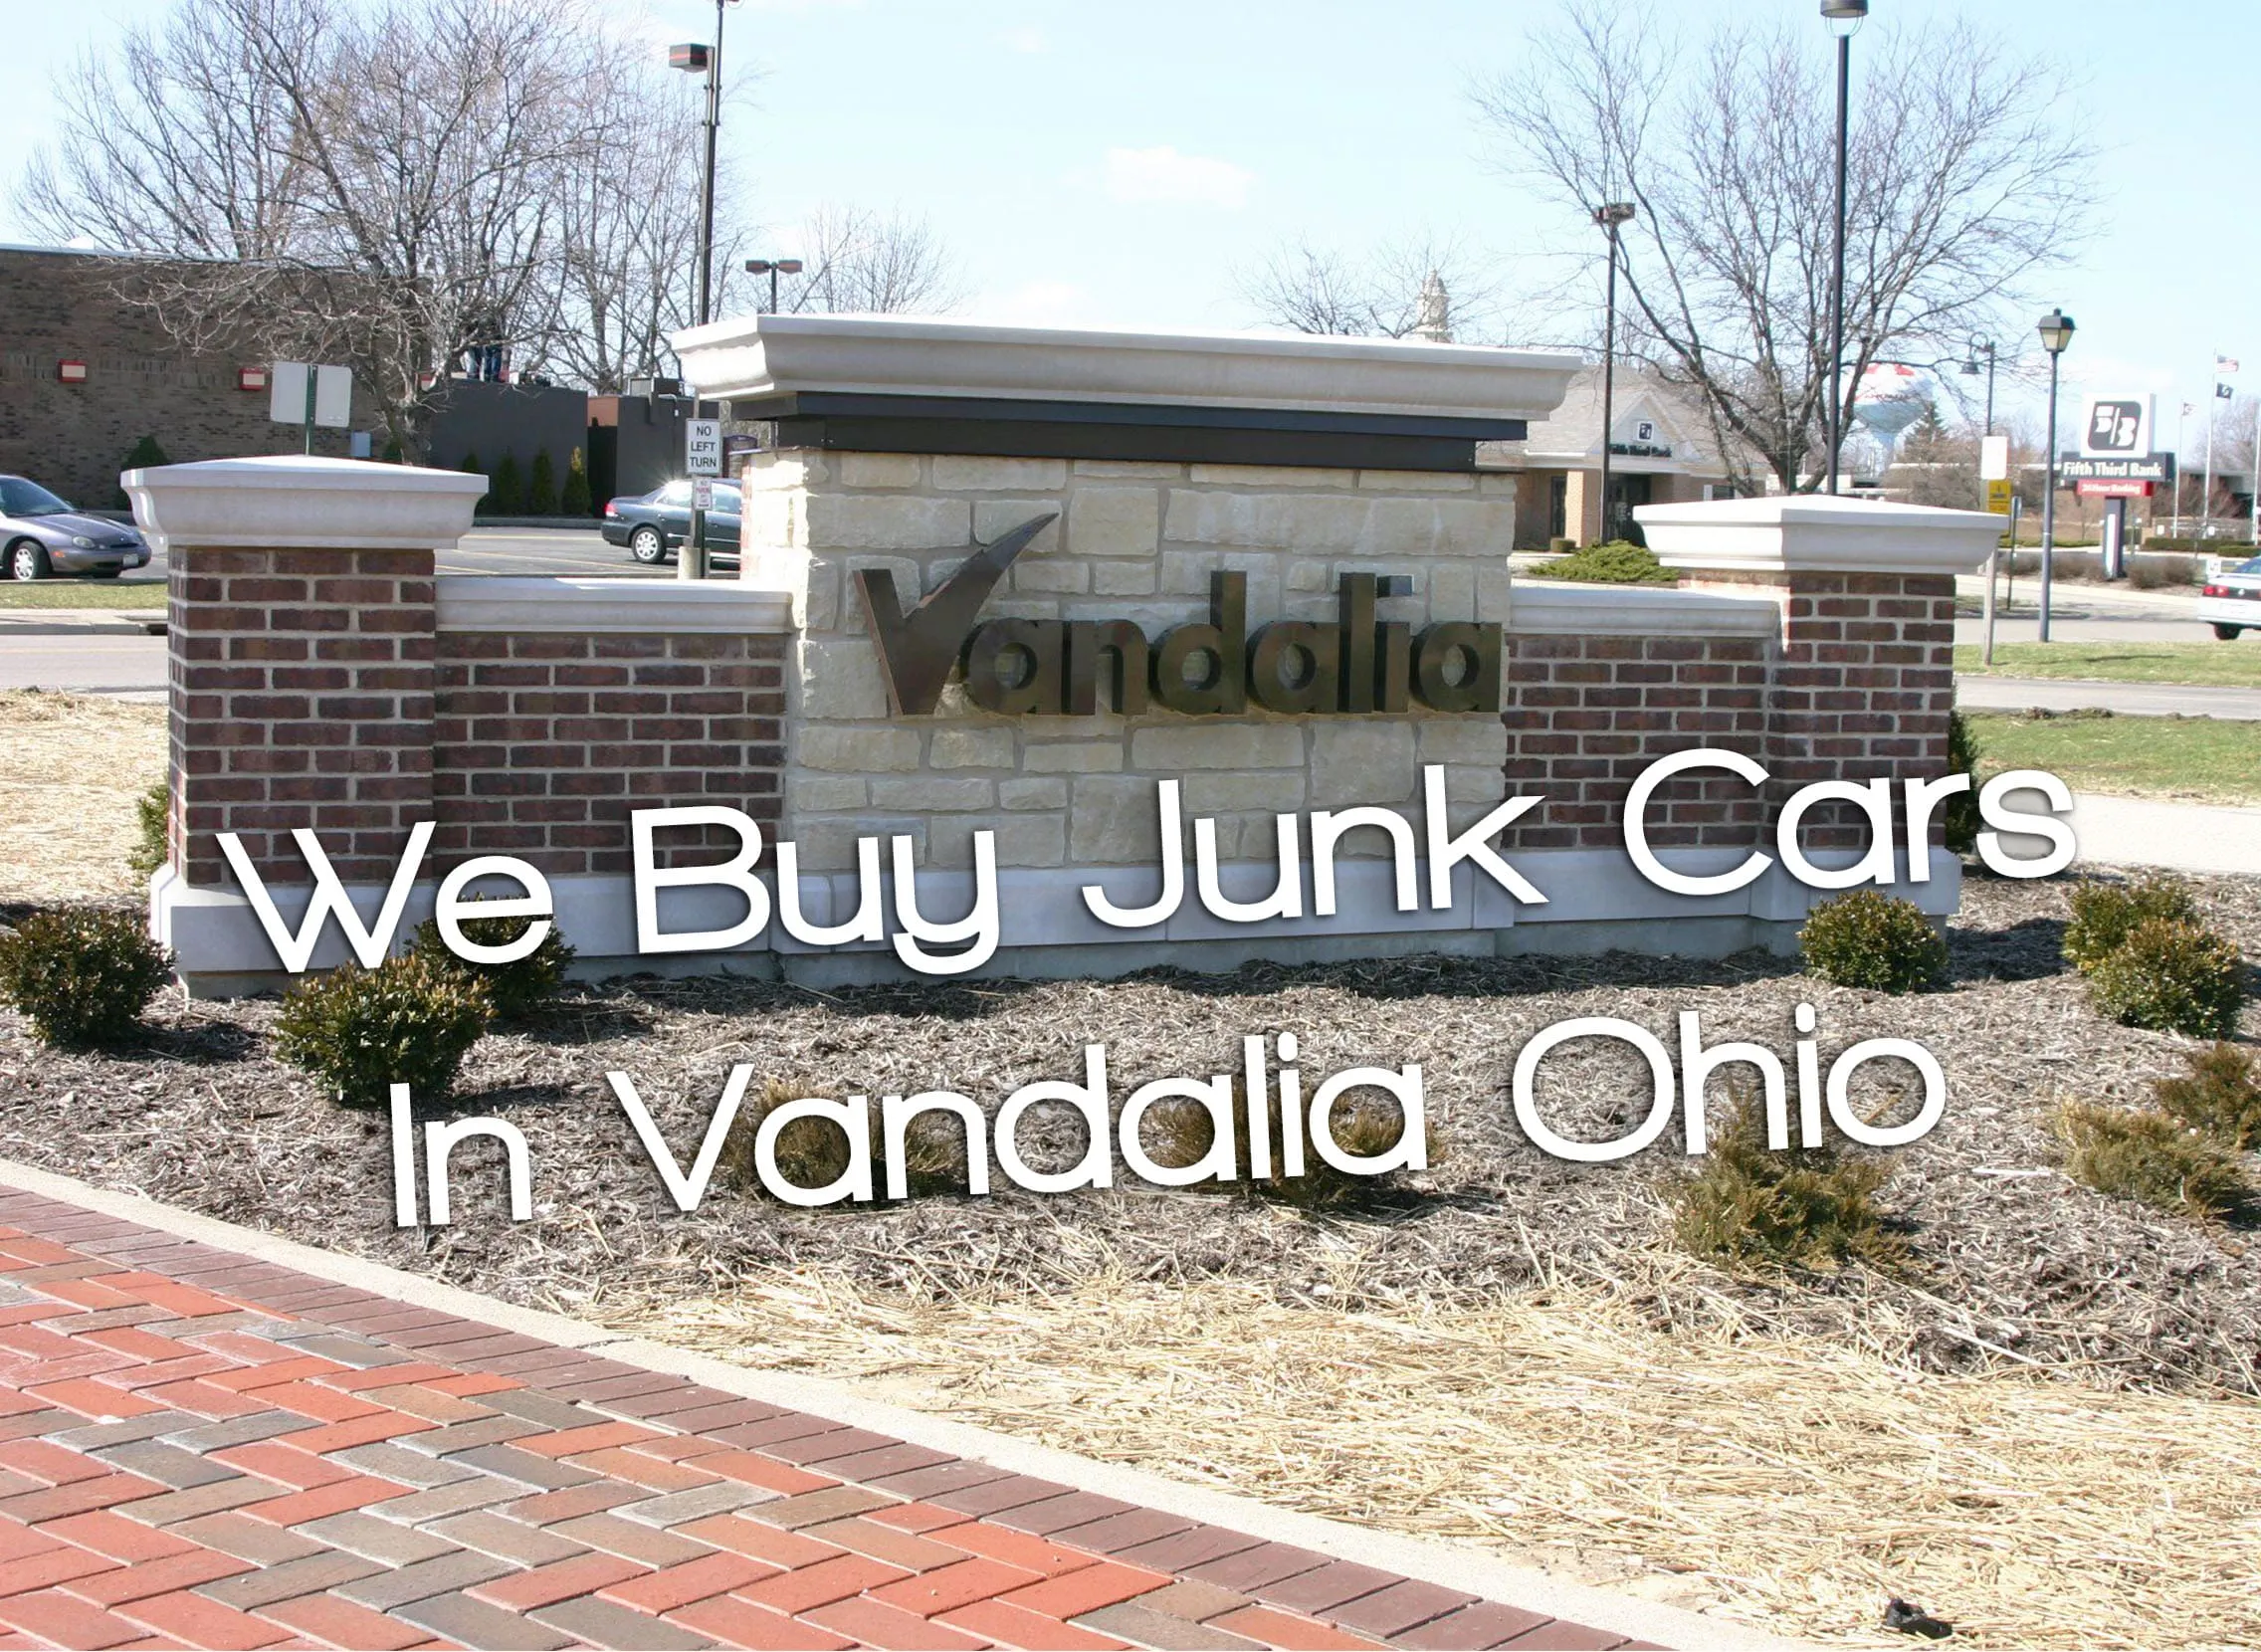 We Buy Junk Cars in Vandalia Ohio